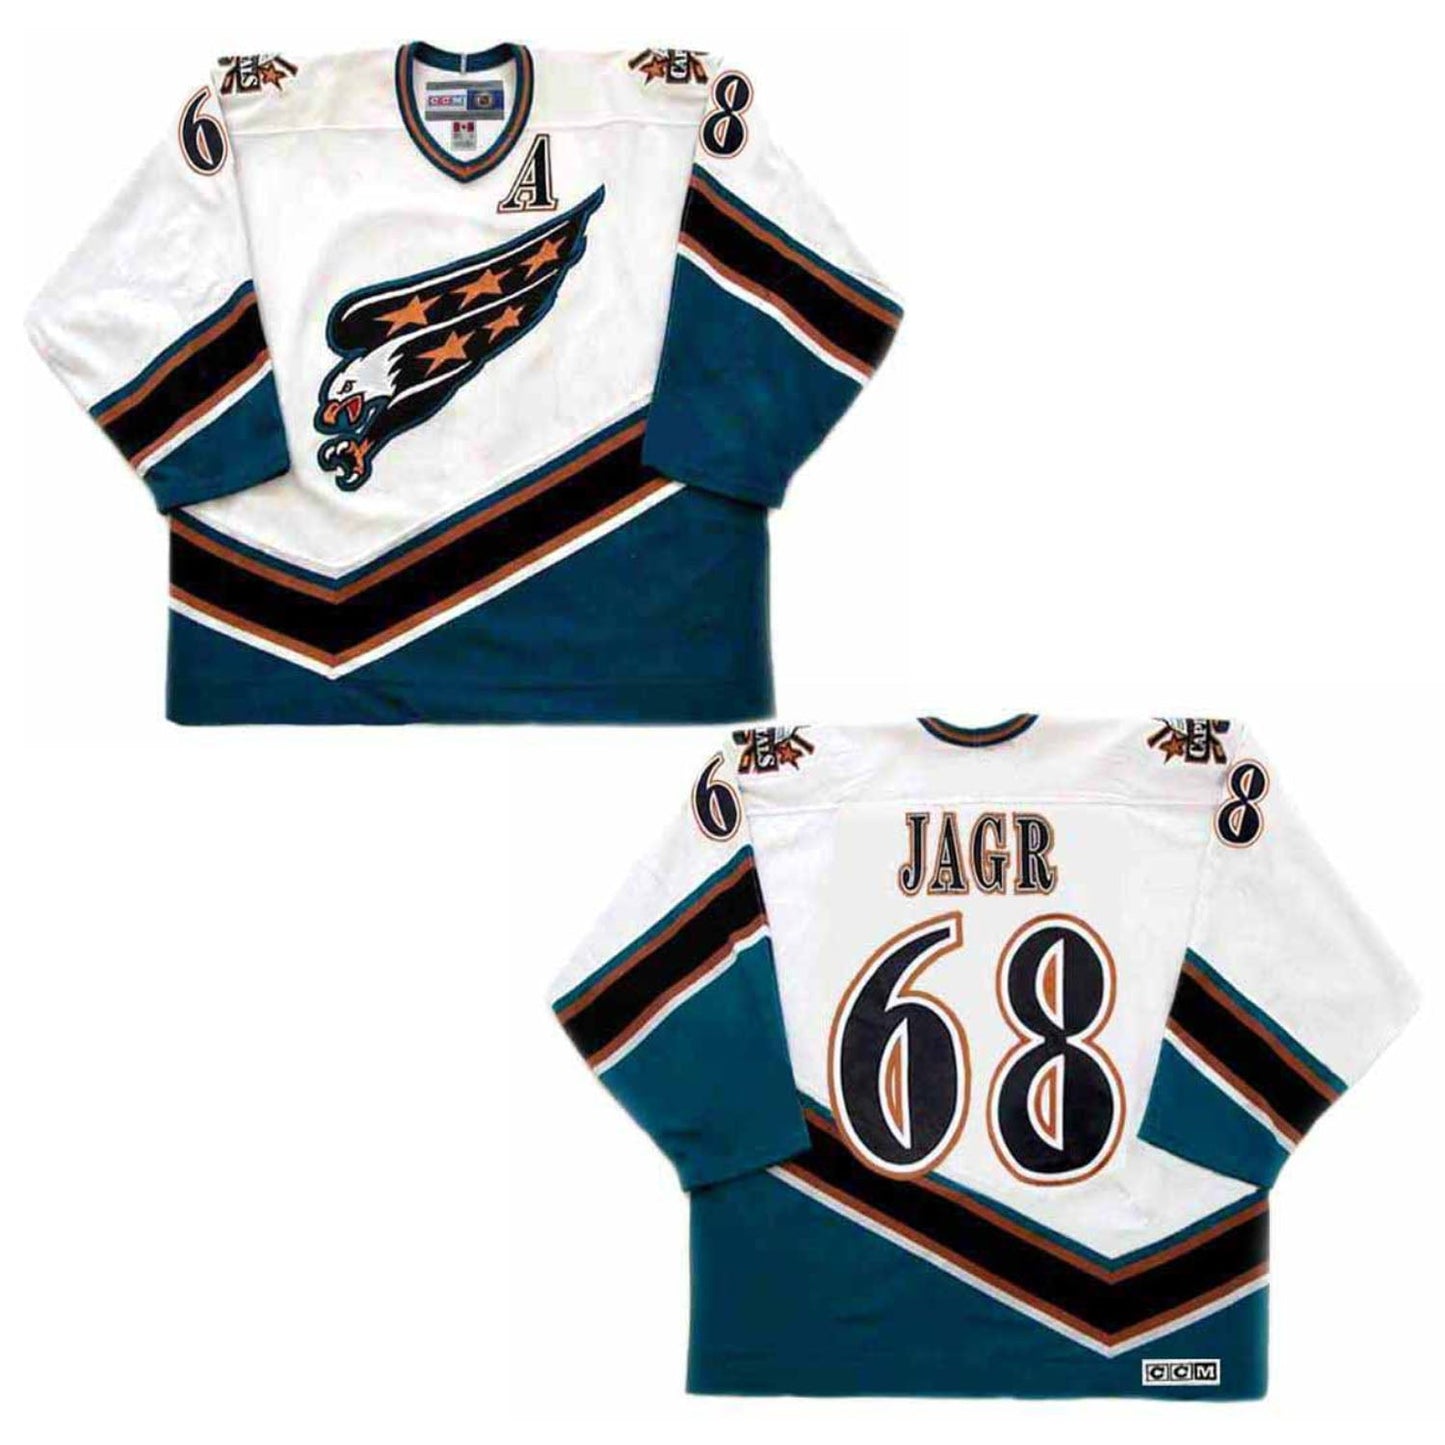 NHL Jaromir Jagr Washington Capitals 68 Jersey